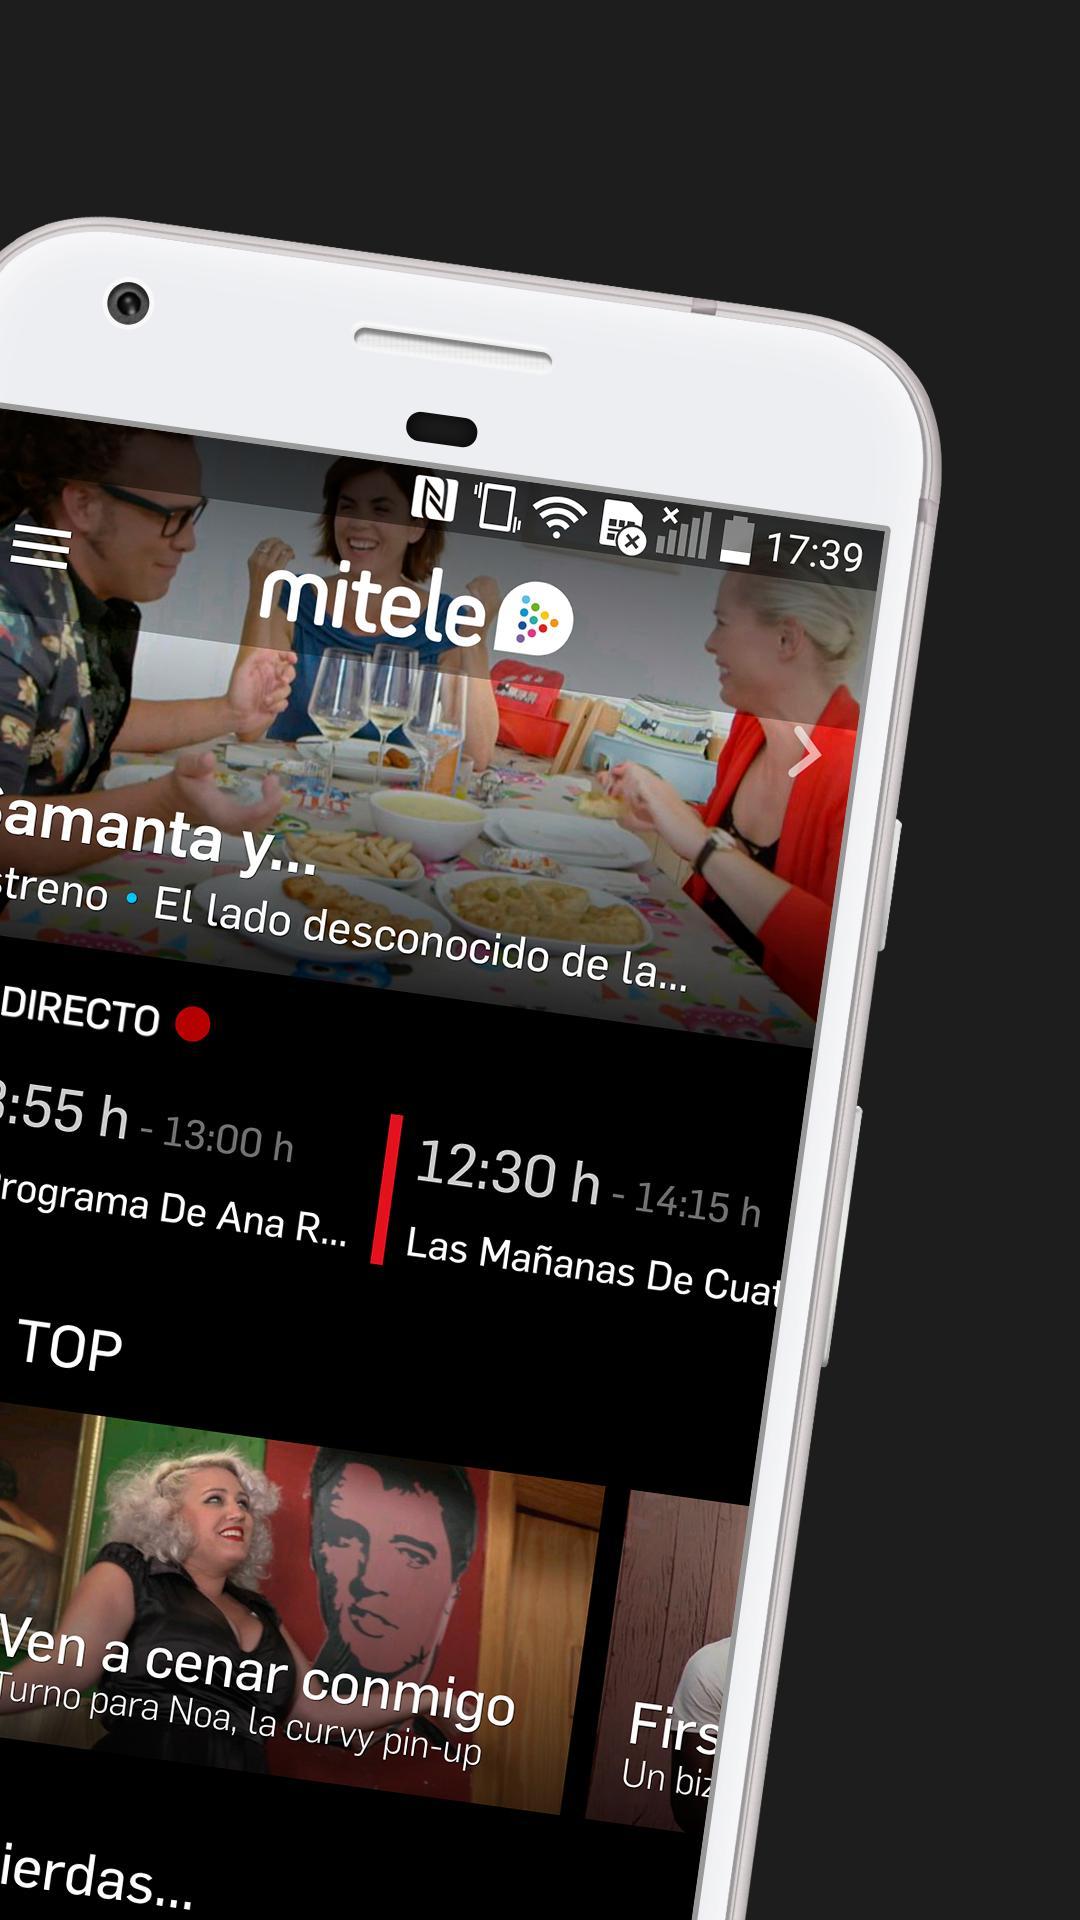 Mitele - Mediaset Spain VOD TV APK for Android Download